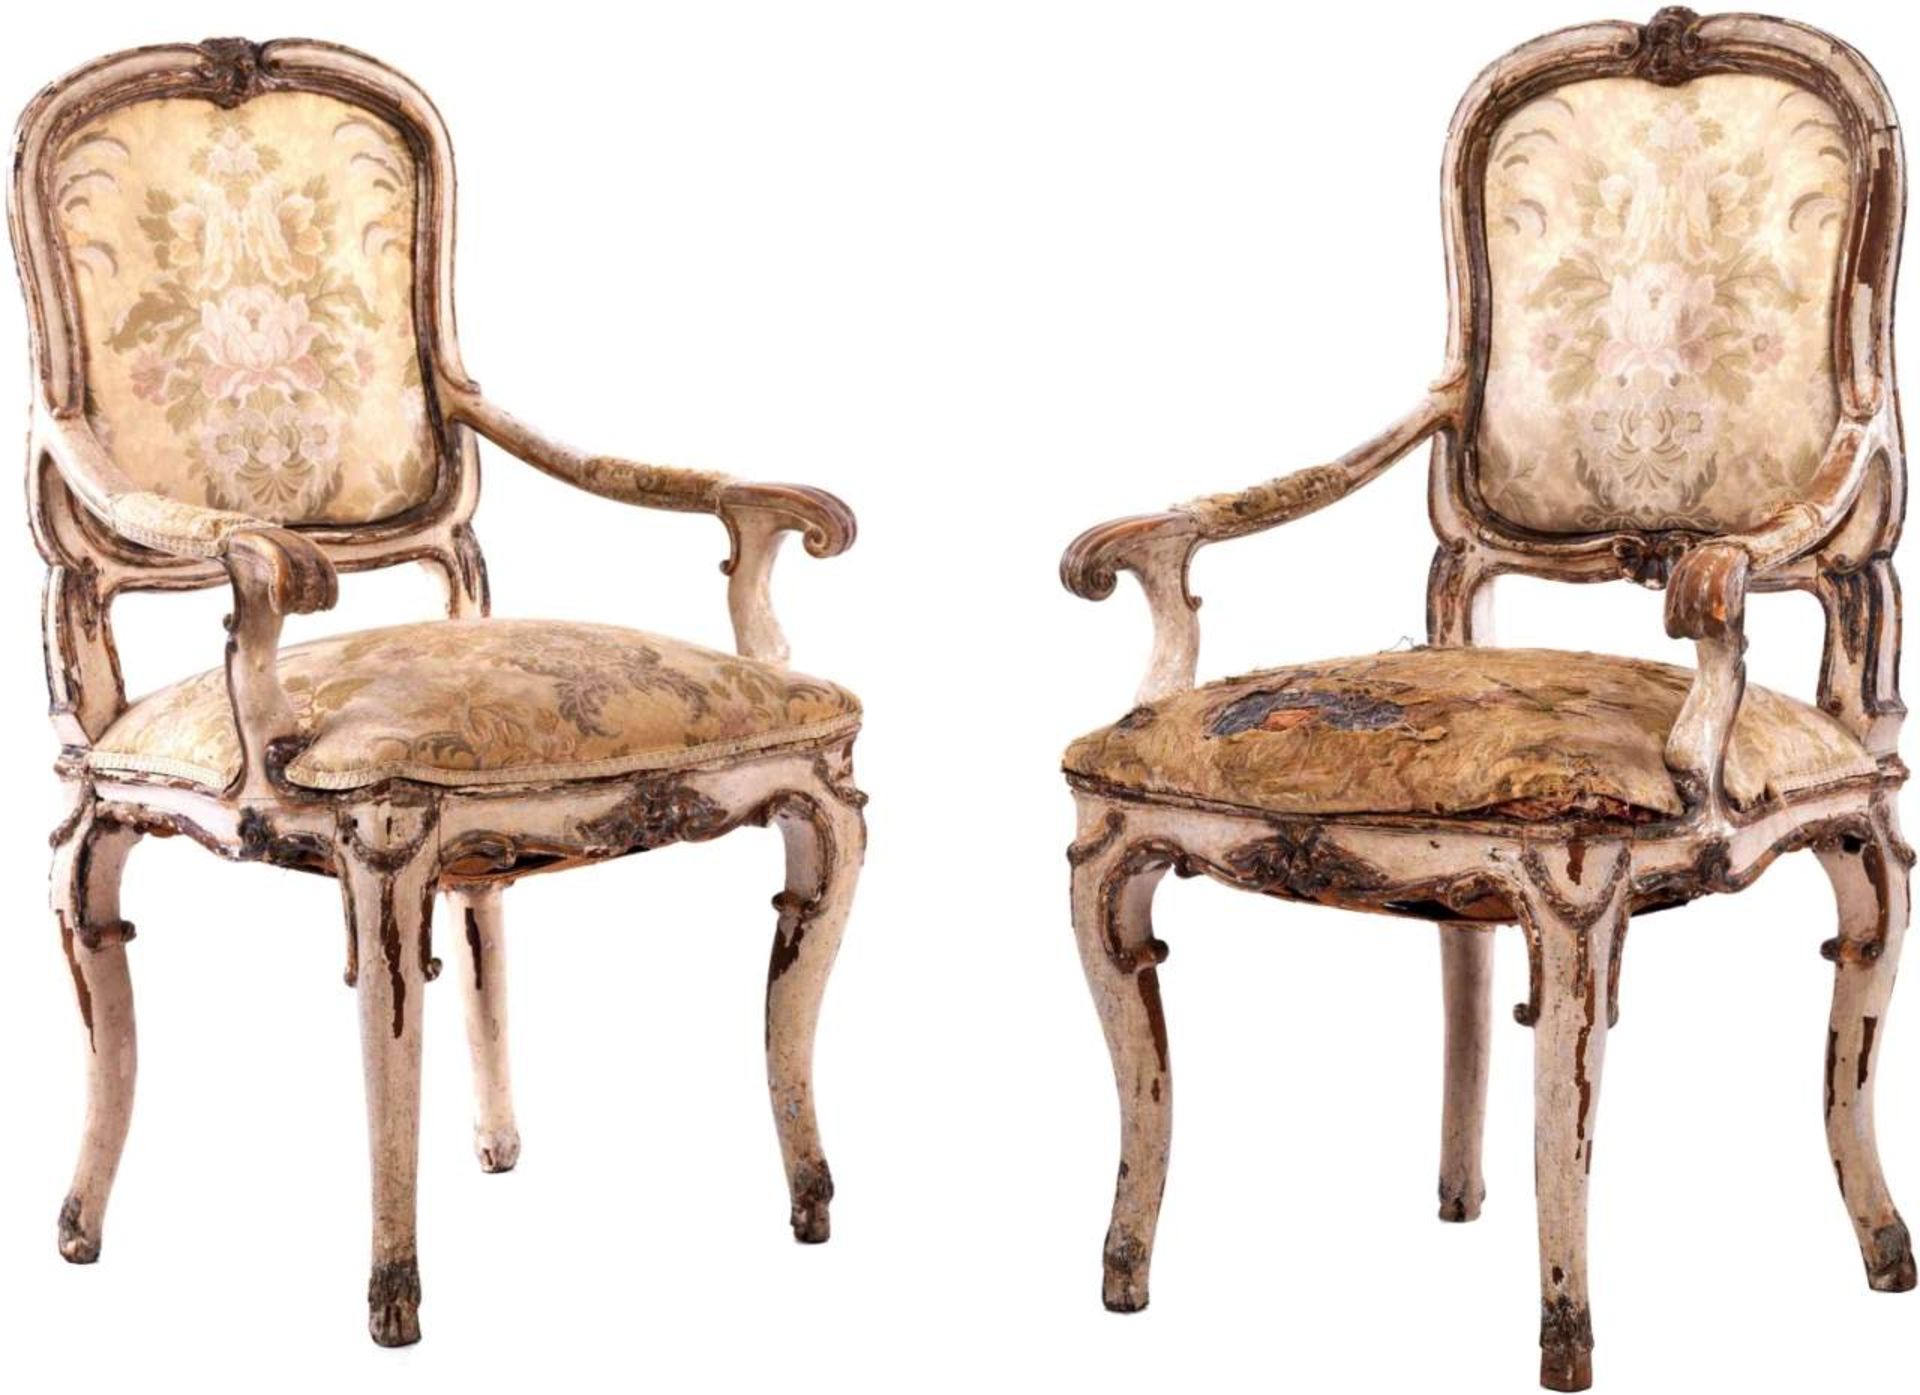 Pair of Rococo armchairsHeight: 99.5 cm. Width: 63 cm. Depth: 50 cm. Bayreuth, 18th century. - Bild 4 aus 5